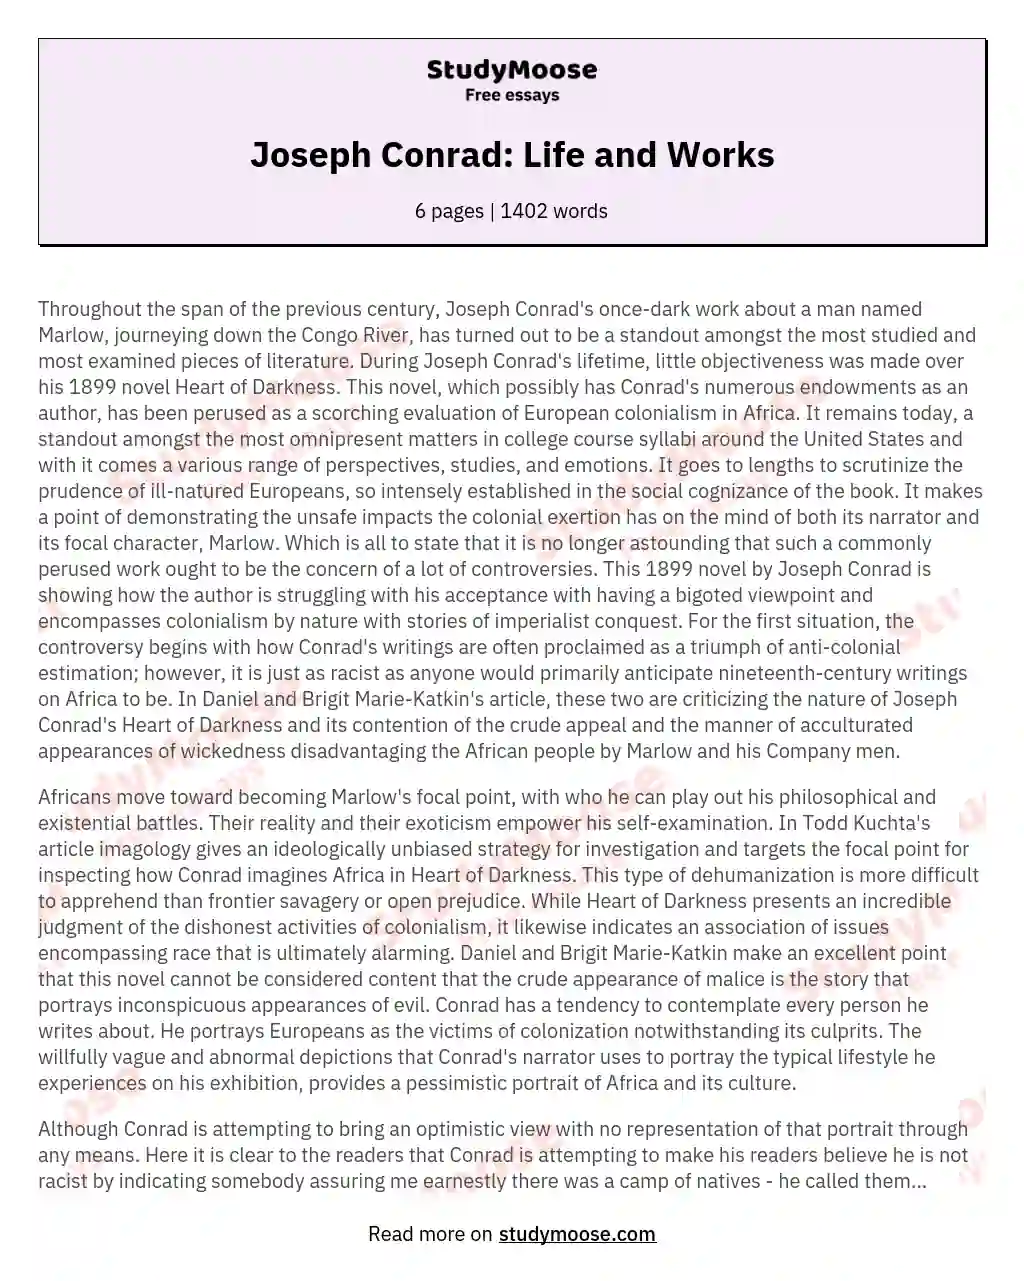 Joseph Conrad: Life and Works essay